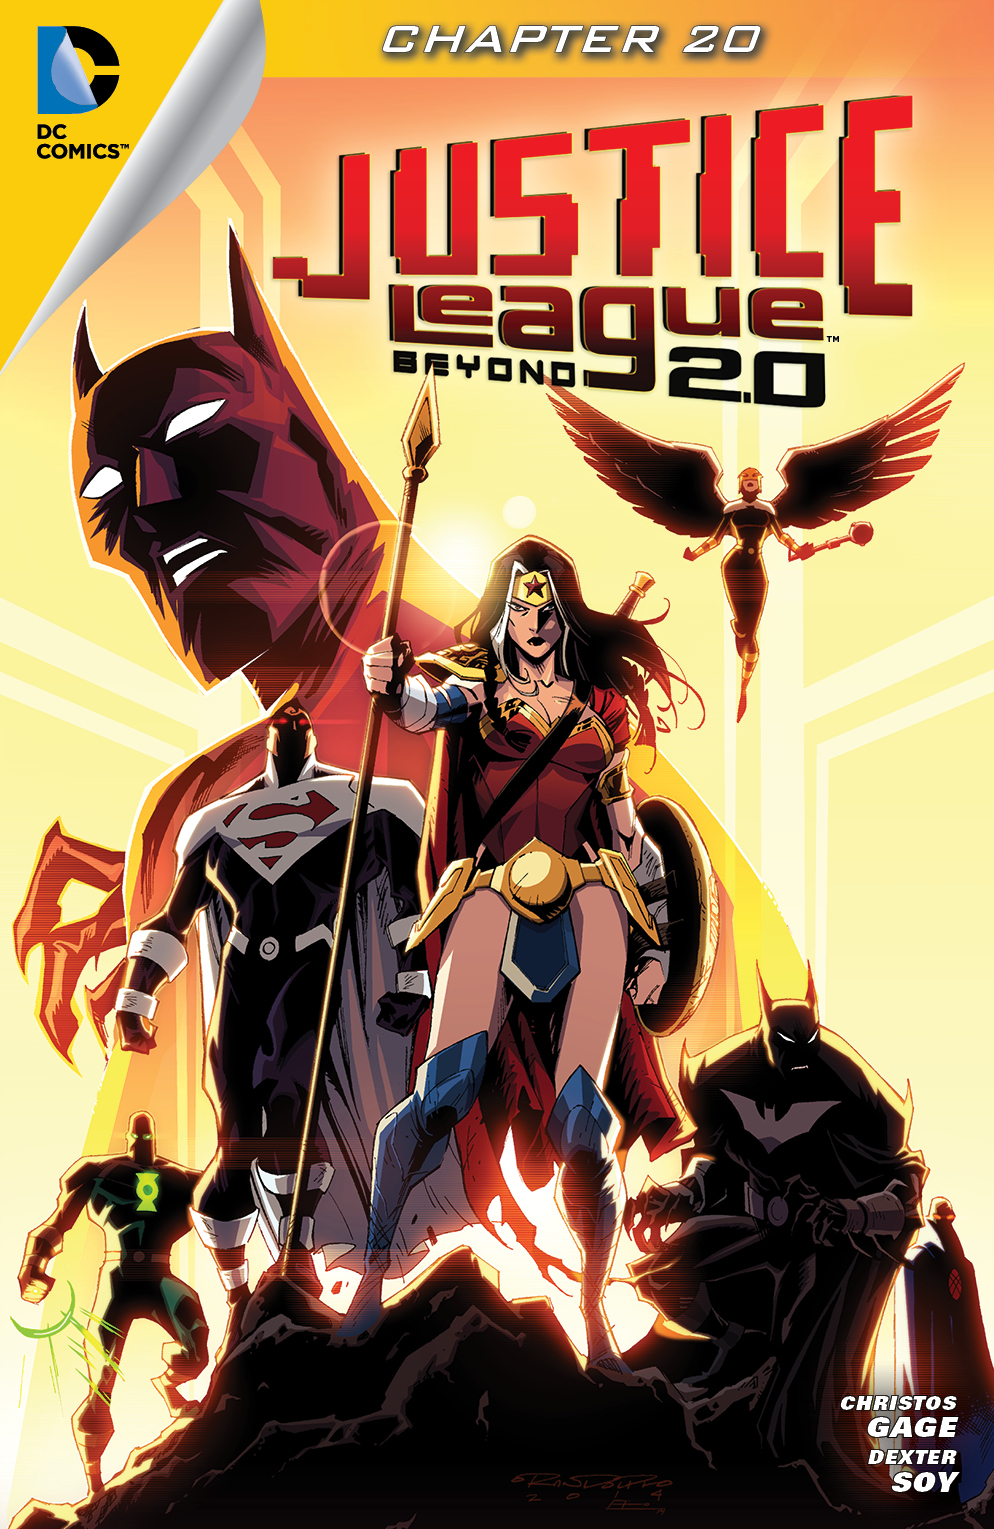 Justice League Beyond 2.0 #20 preview images